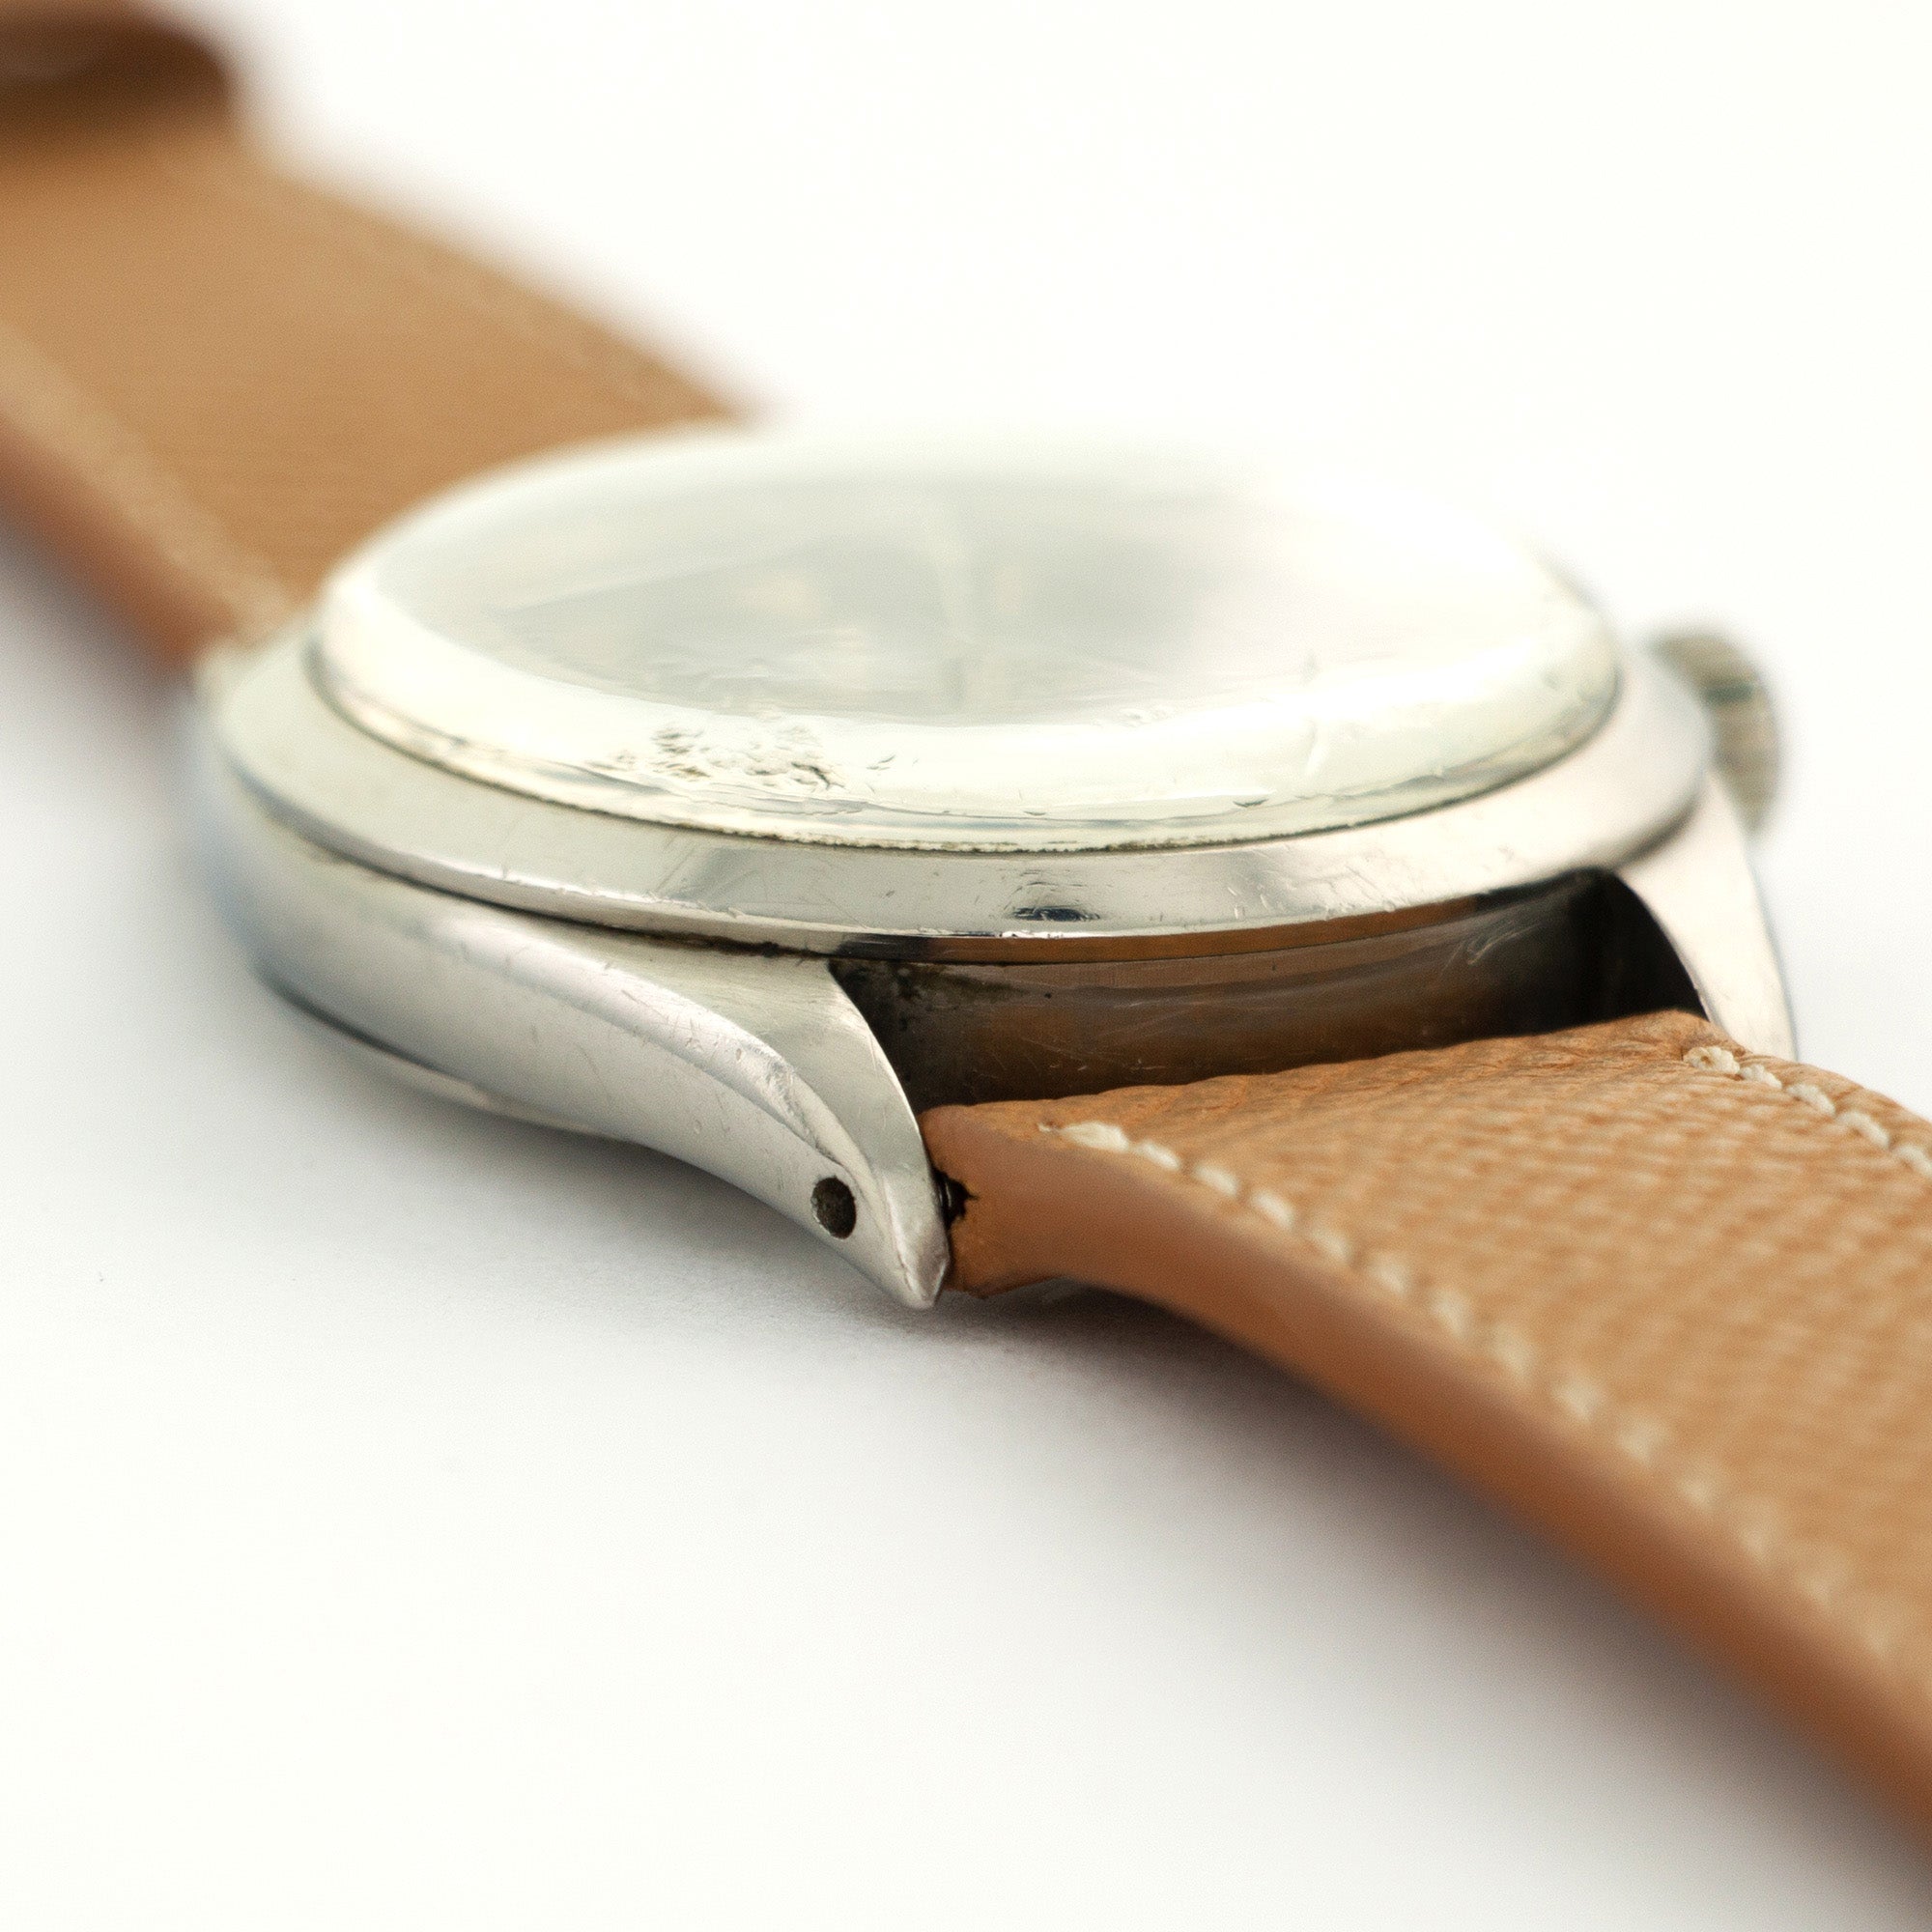 Rolex - Rolex Steel Explorer Chapter Ring Gilt Dial Watch Ref. 1016 - The Keystone Watches